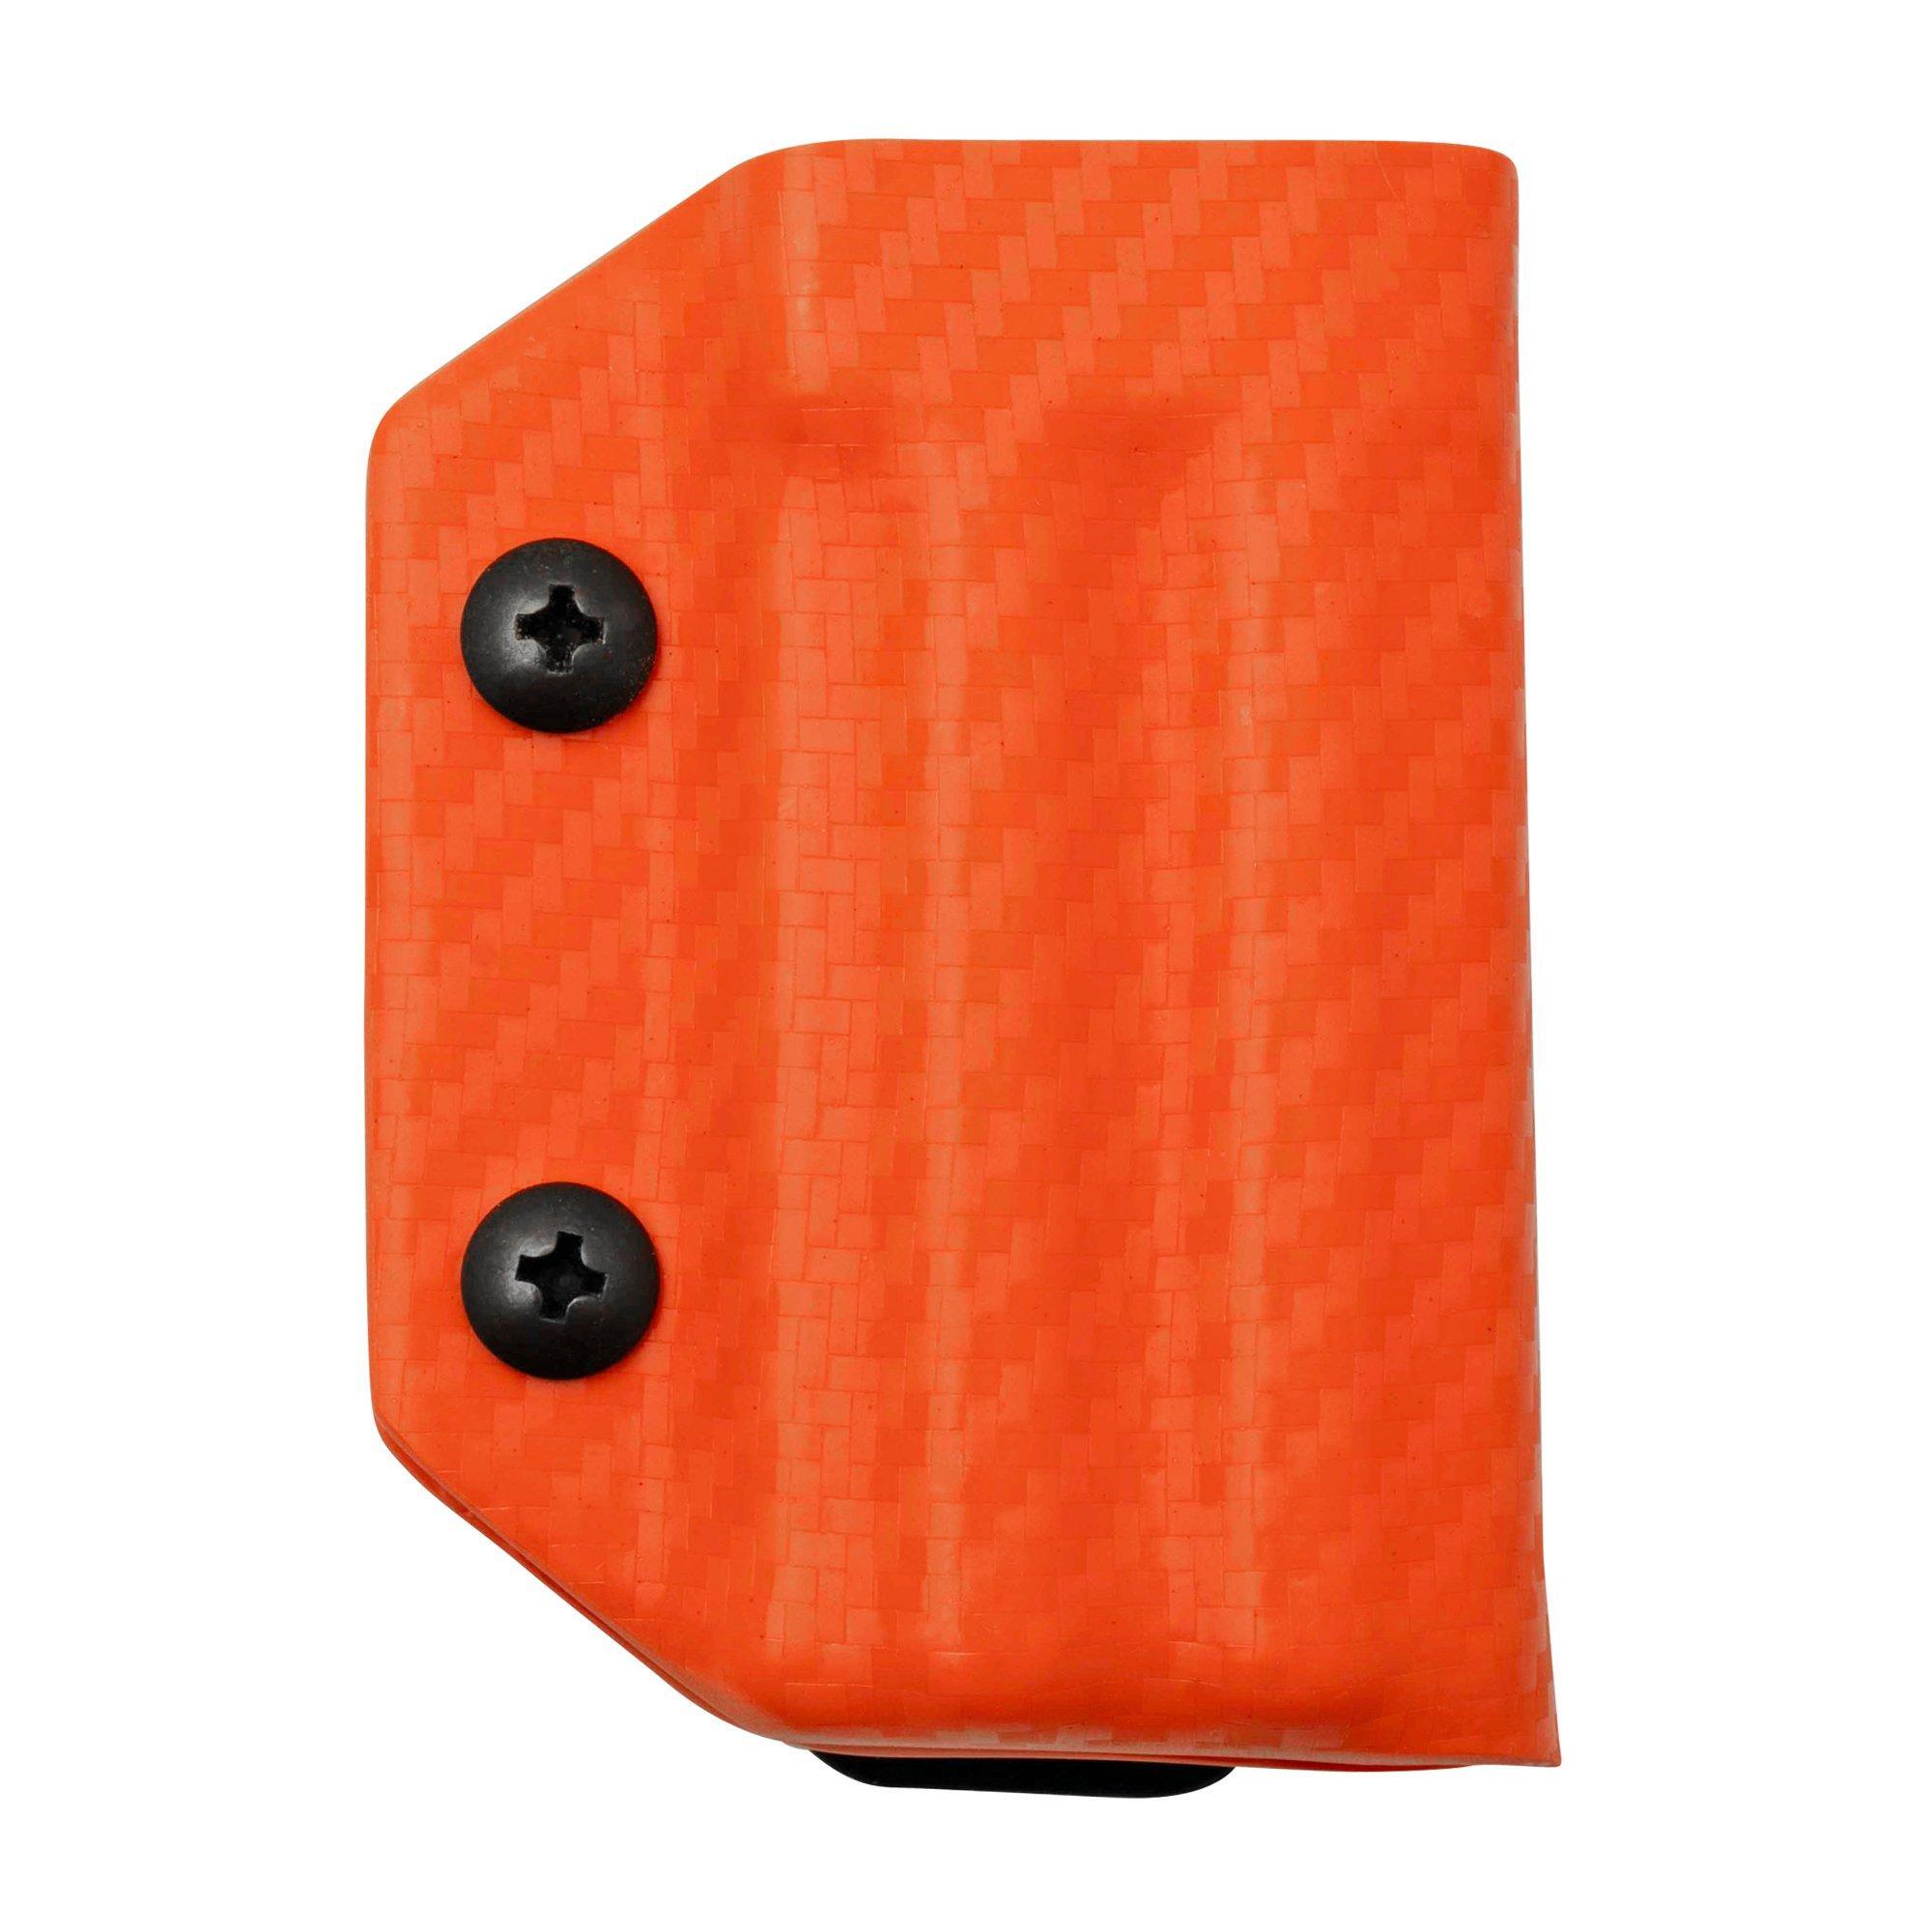 Clip & Carry Clip And Carry Kydex Sheath Victorinox SwissTool, Carbon Fiber Orange VSTOOL-CF-ORNG riemholster